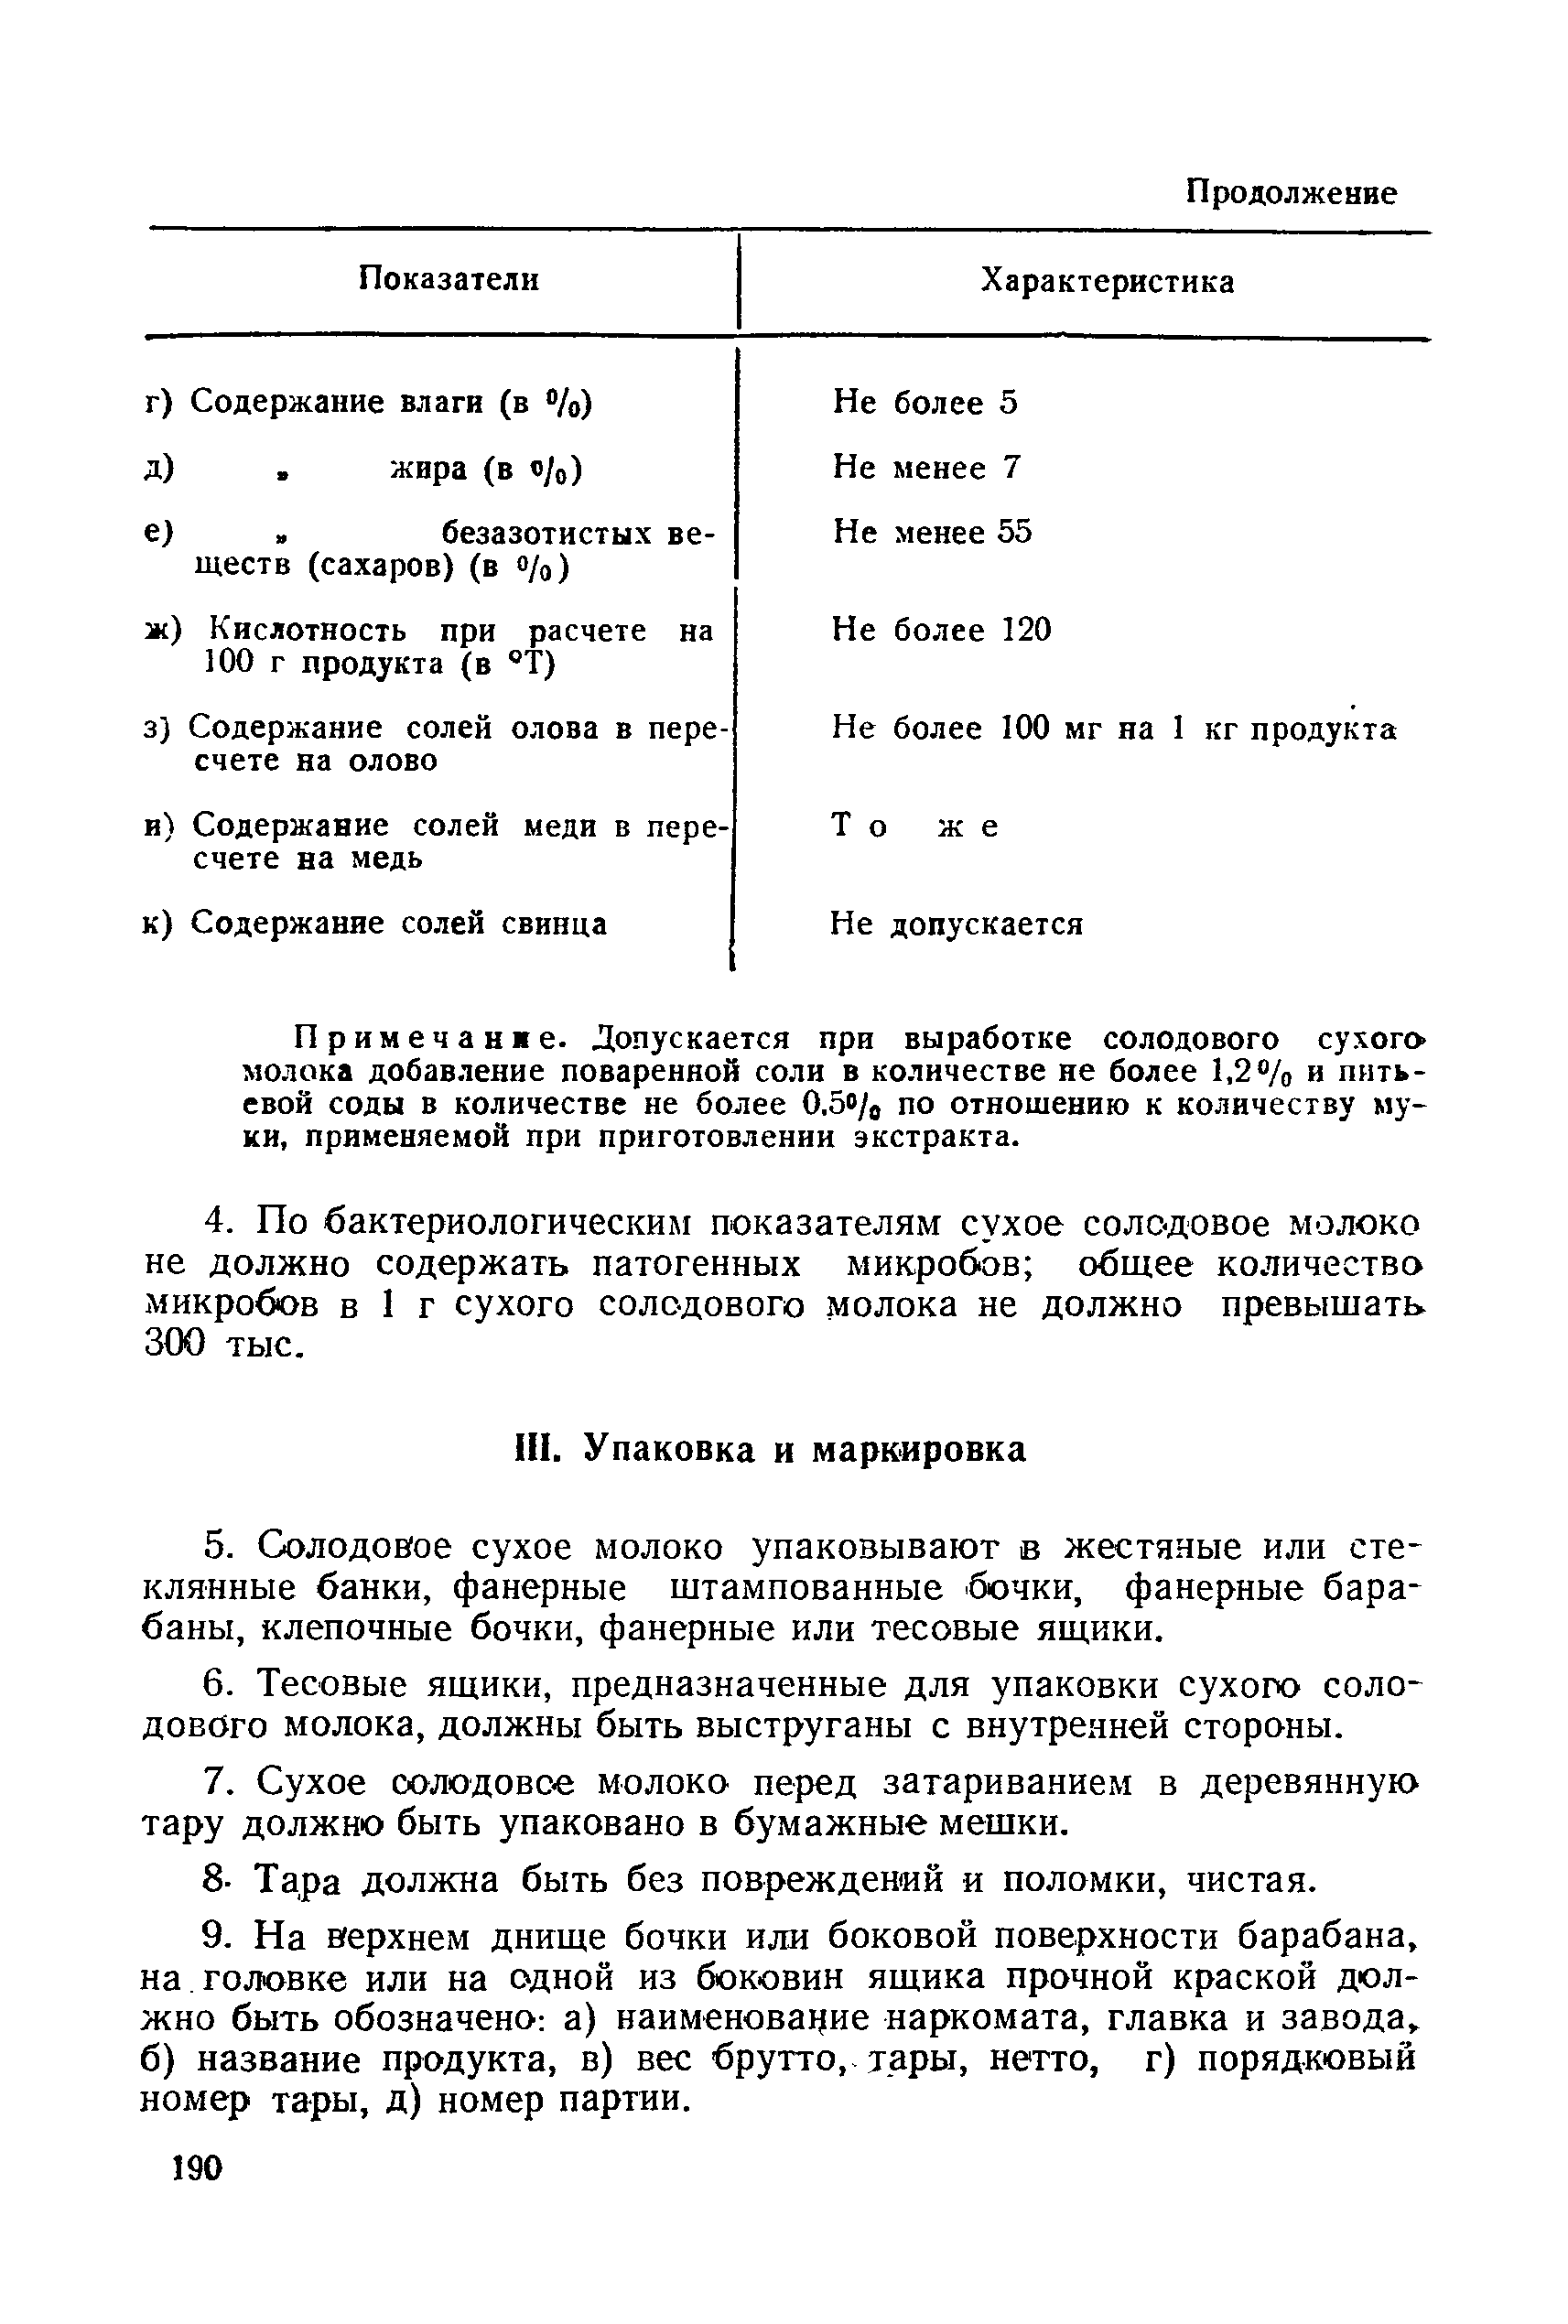 ВТУ НКММП 178-43